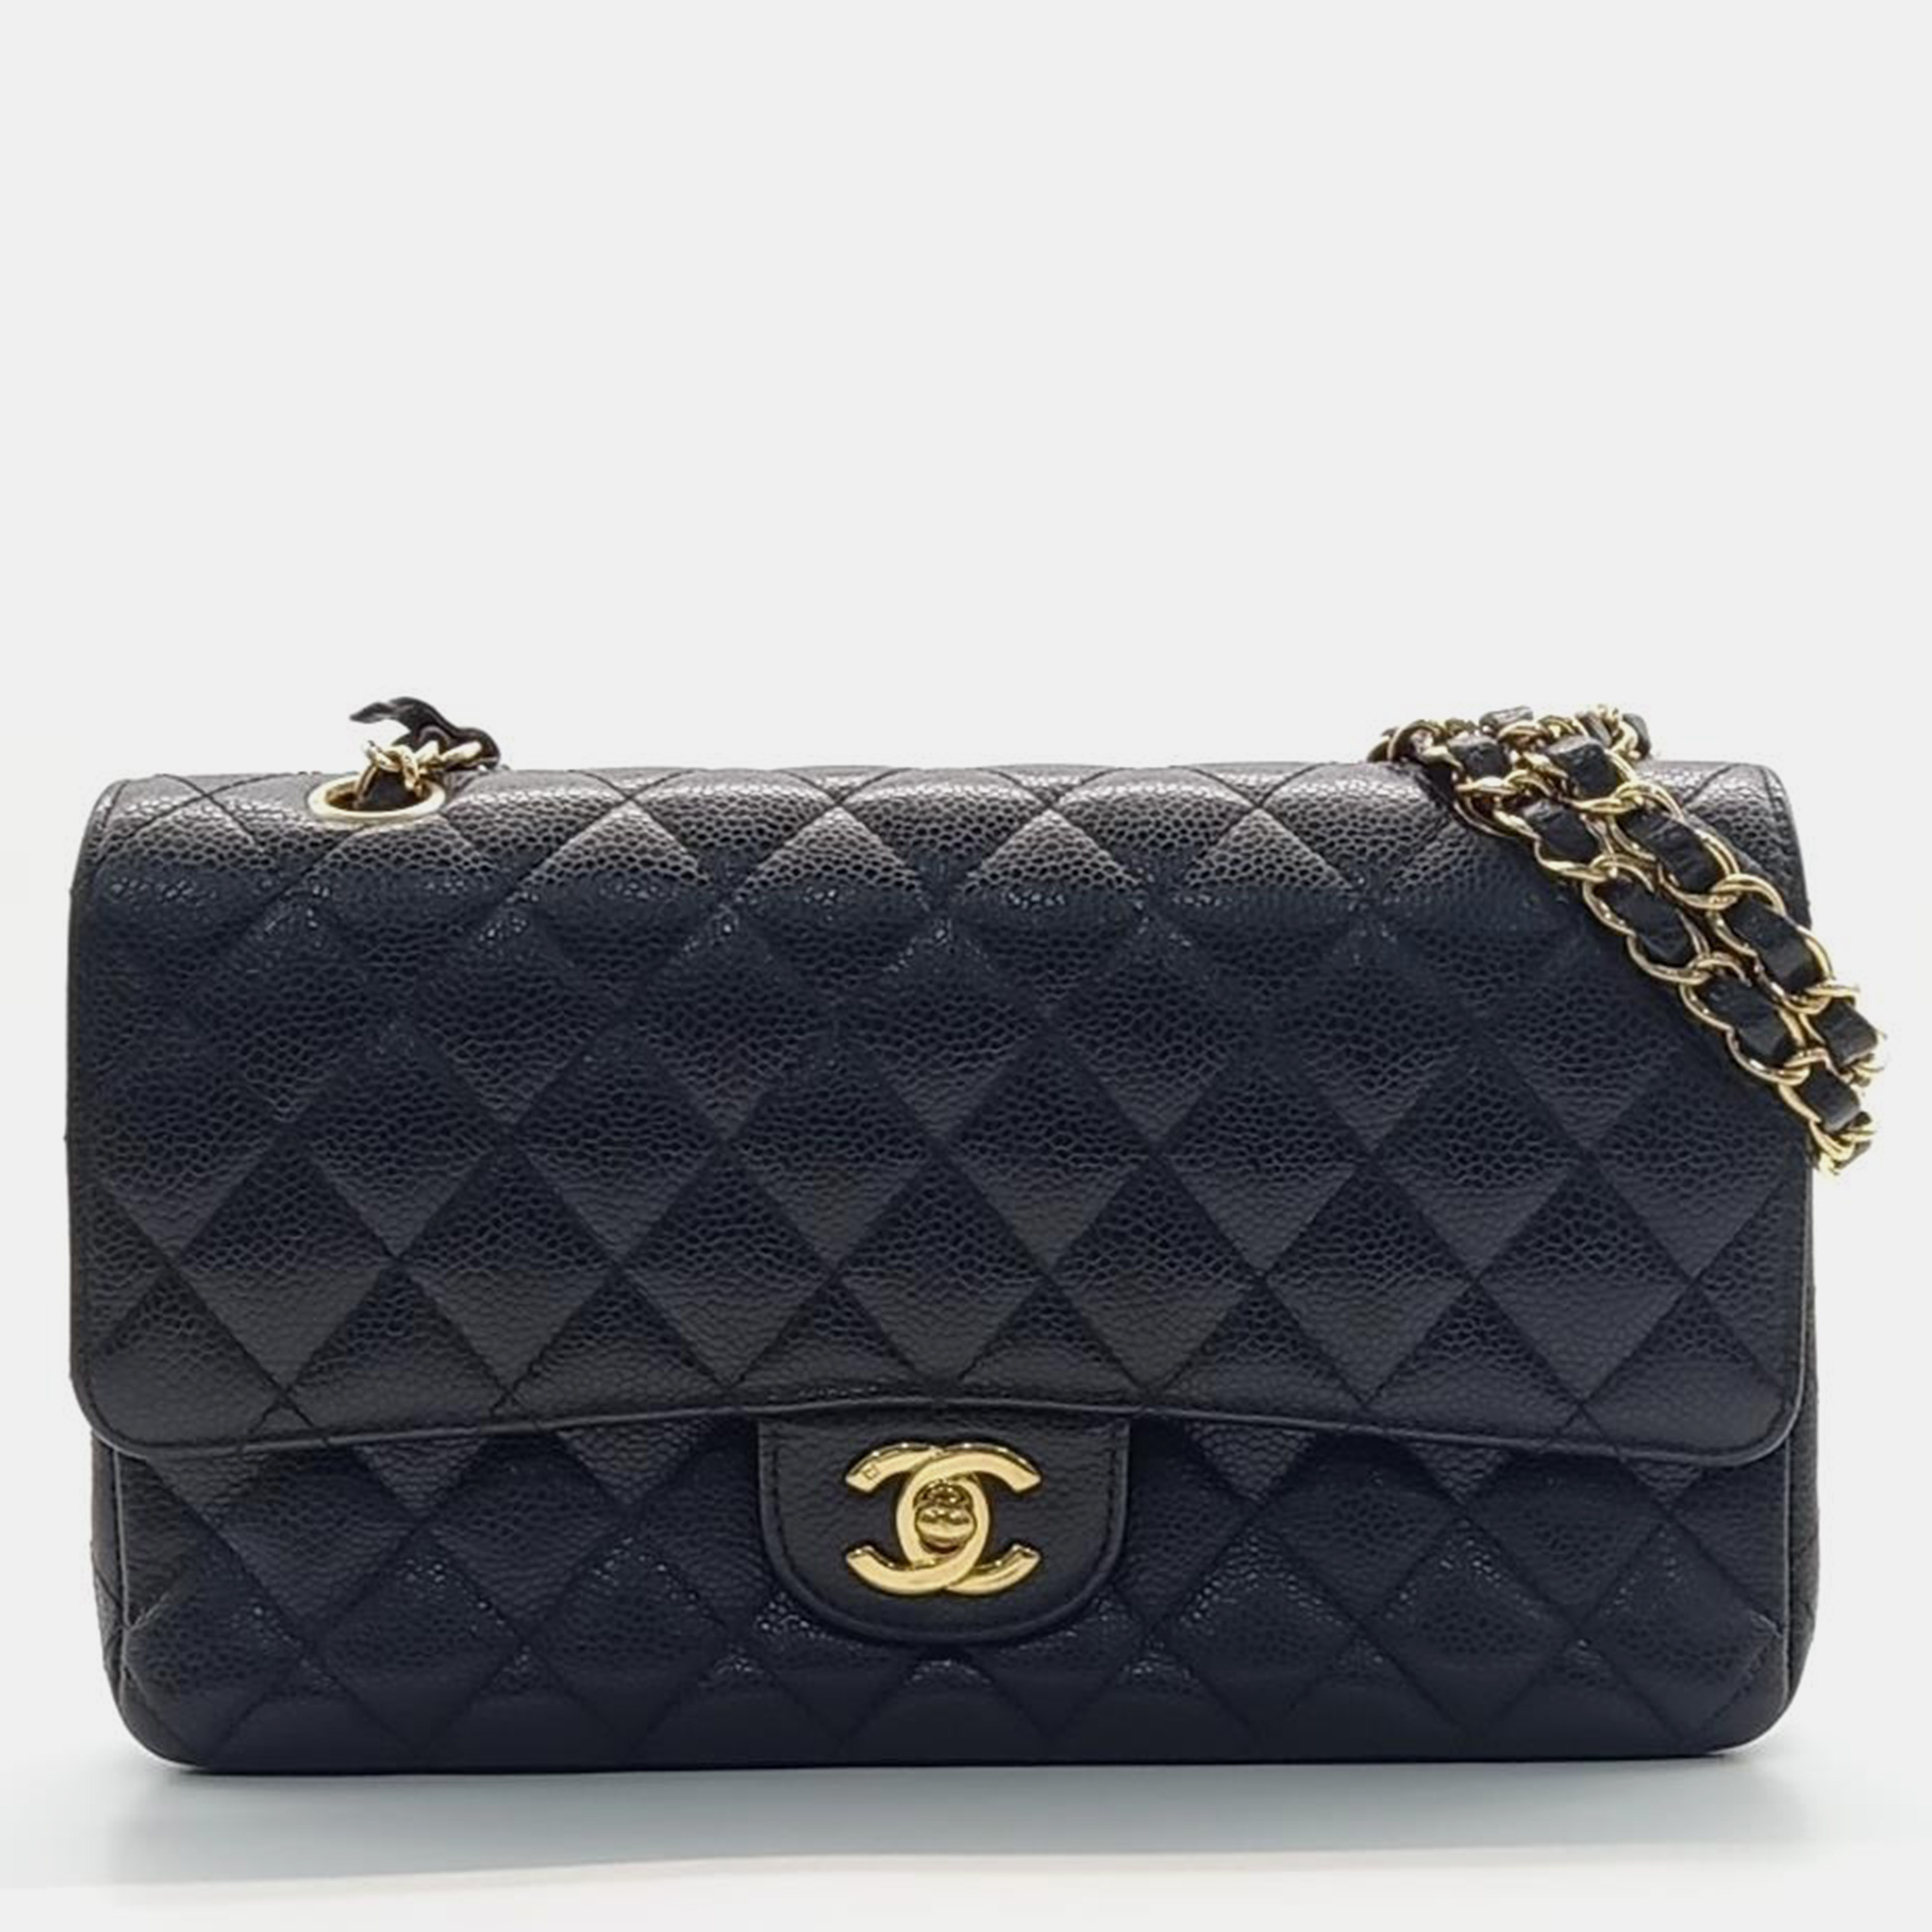 Chanel caviar classic medium handbag